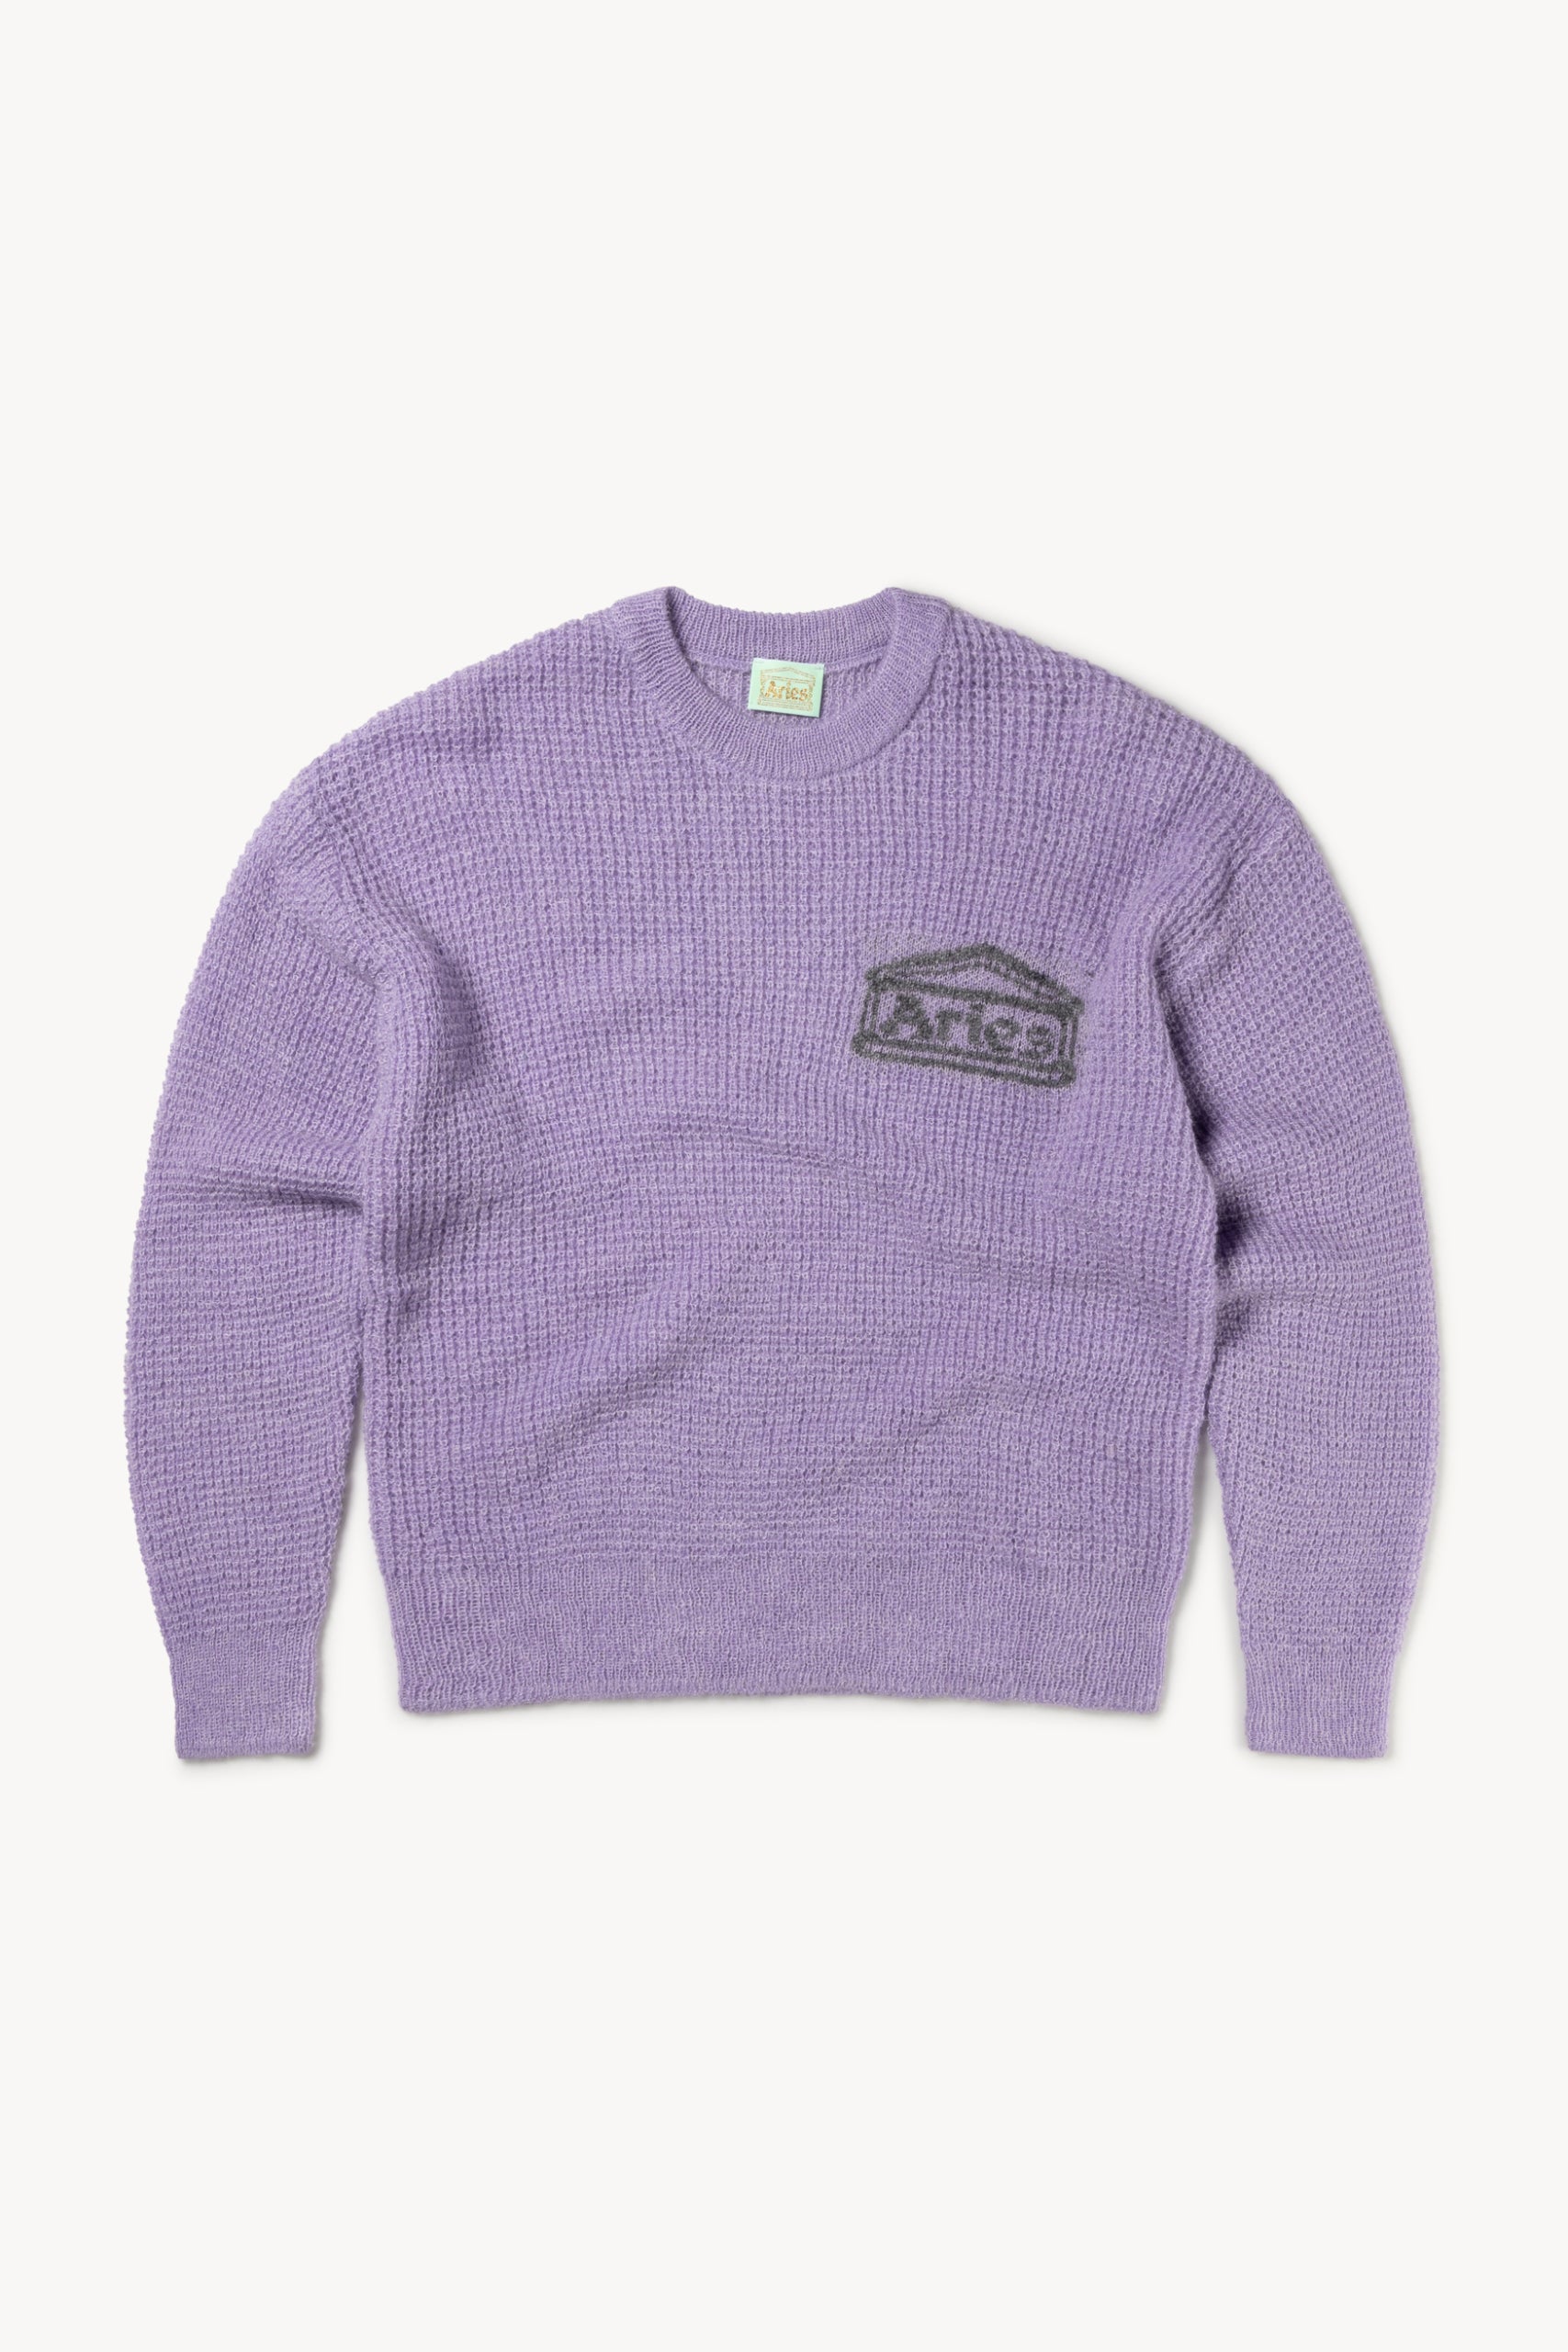 Aries Arise Mens Tie Dye Temple Logo Crew Sweatshirt Lilac Purple